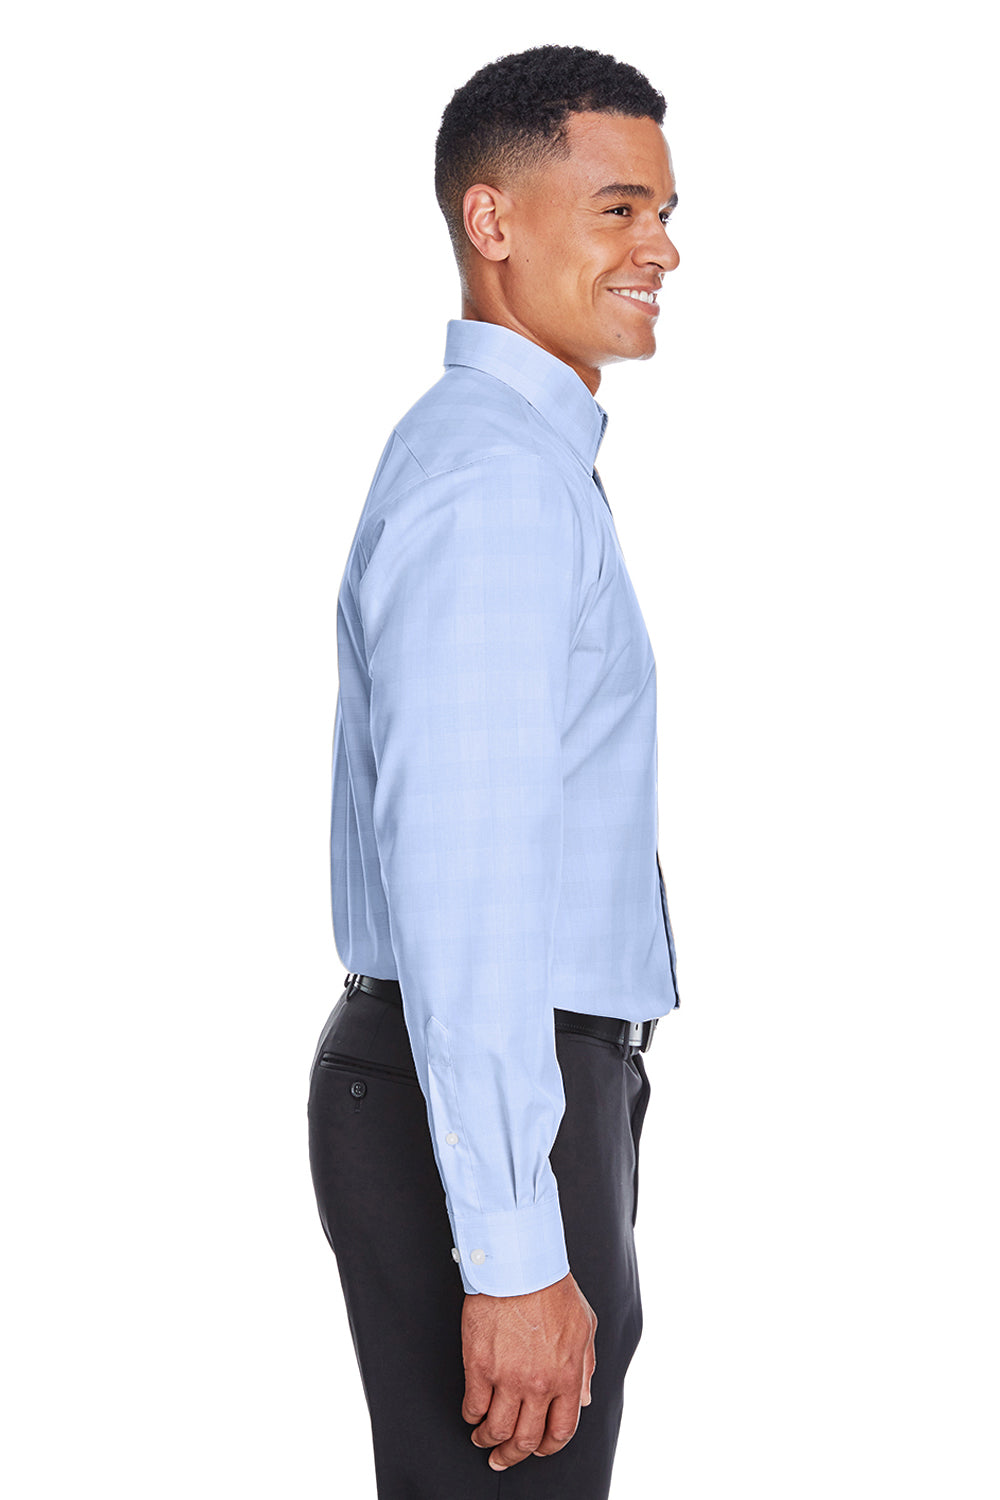 Devon & Jones DG520 Mens Crown Woven Collection Wrinkle Resistant Long Sleeve Button Down Shirt w/ Pocket White/Light French Blue Side